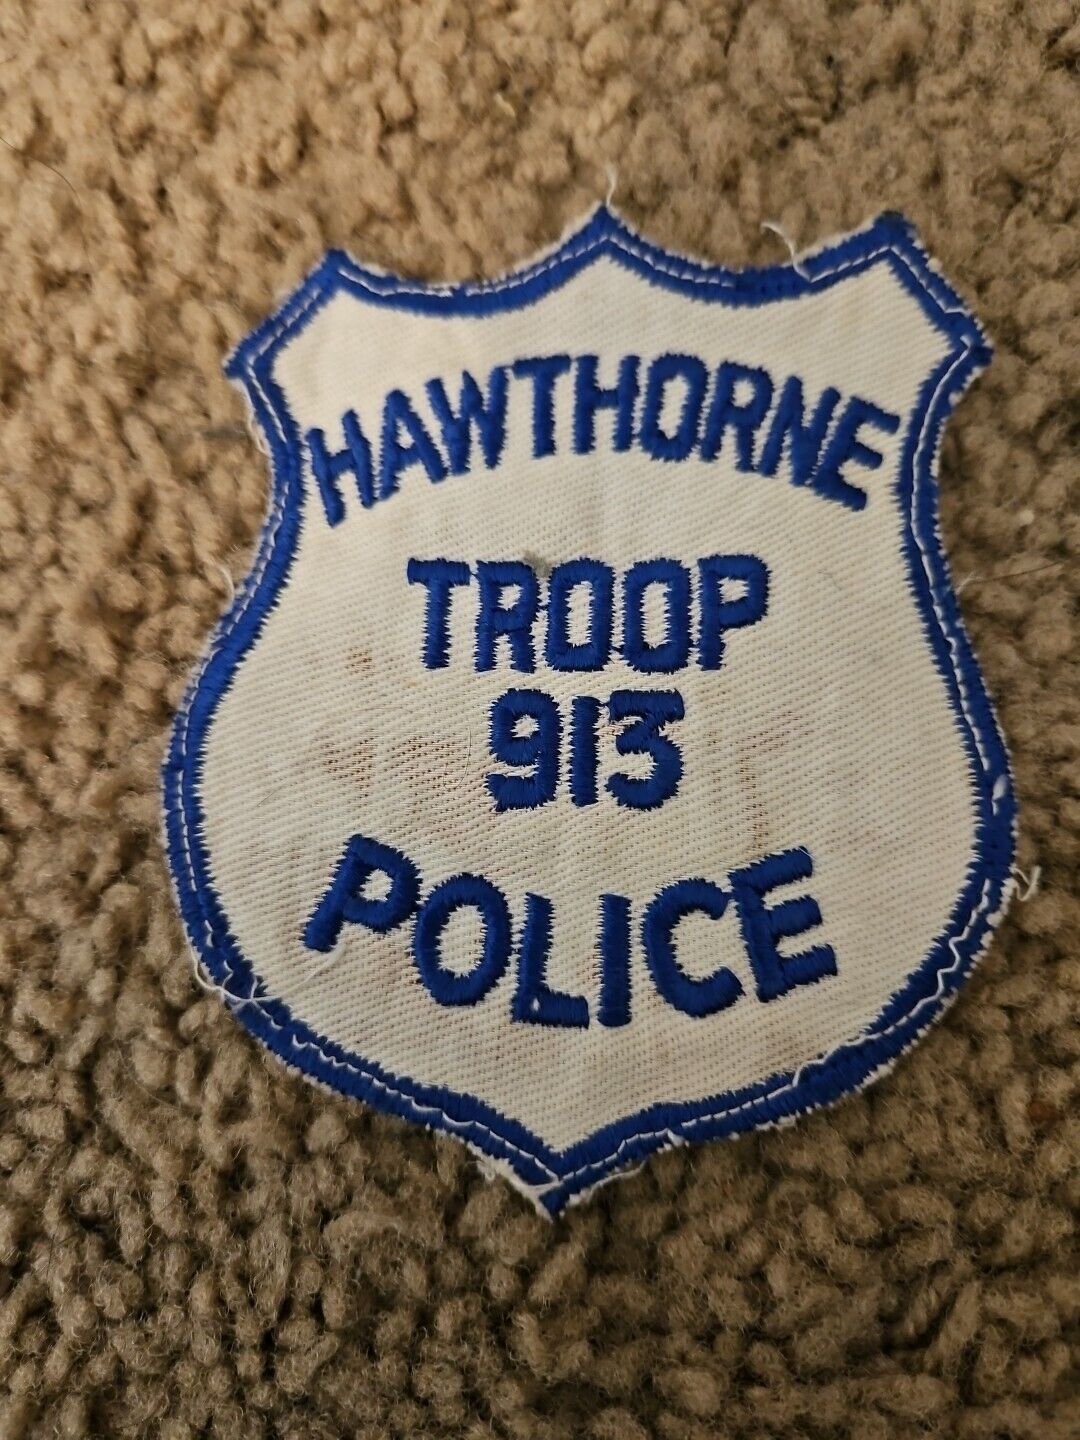 Vintage Hawthorne troop 913 Police Patch. Rare.